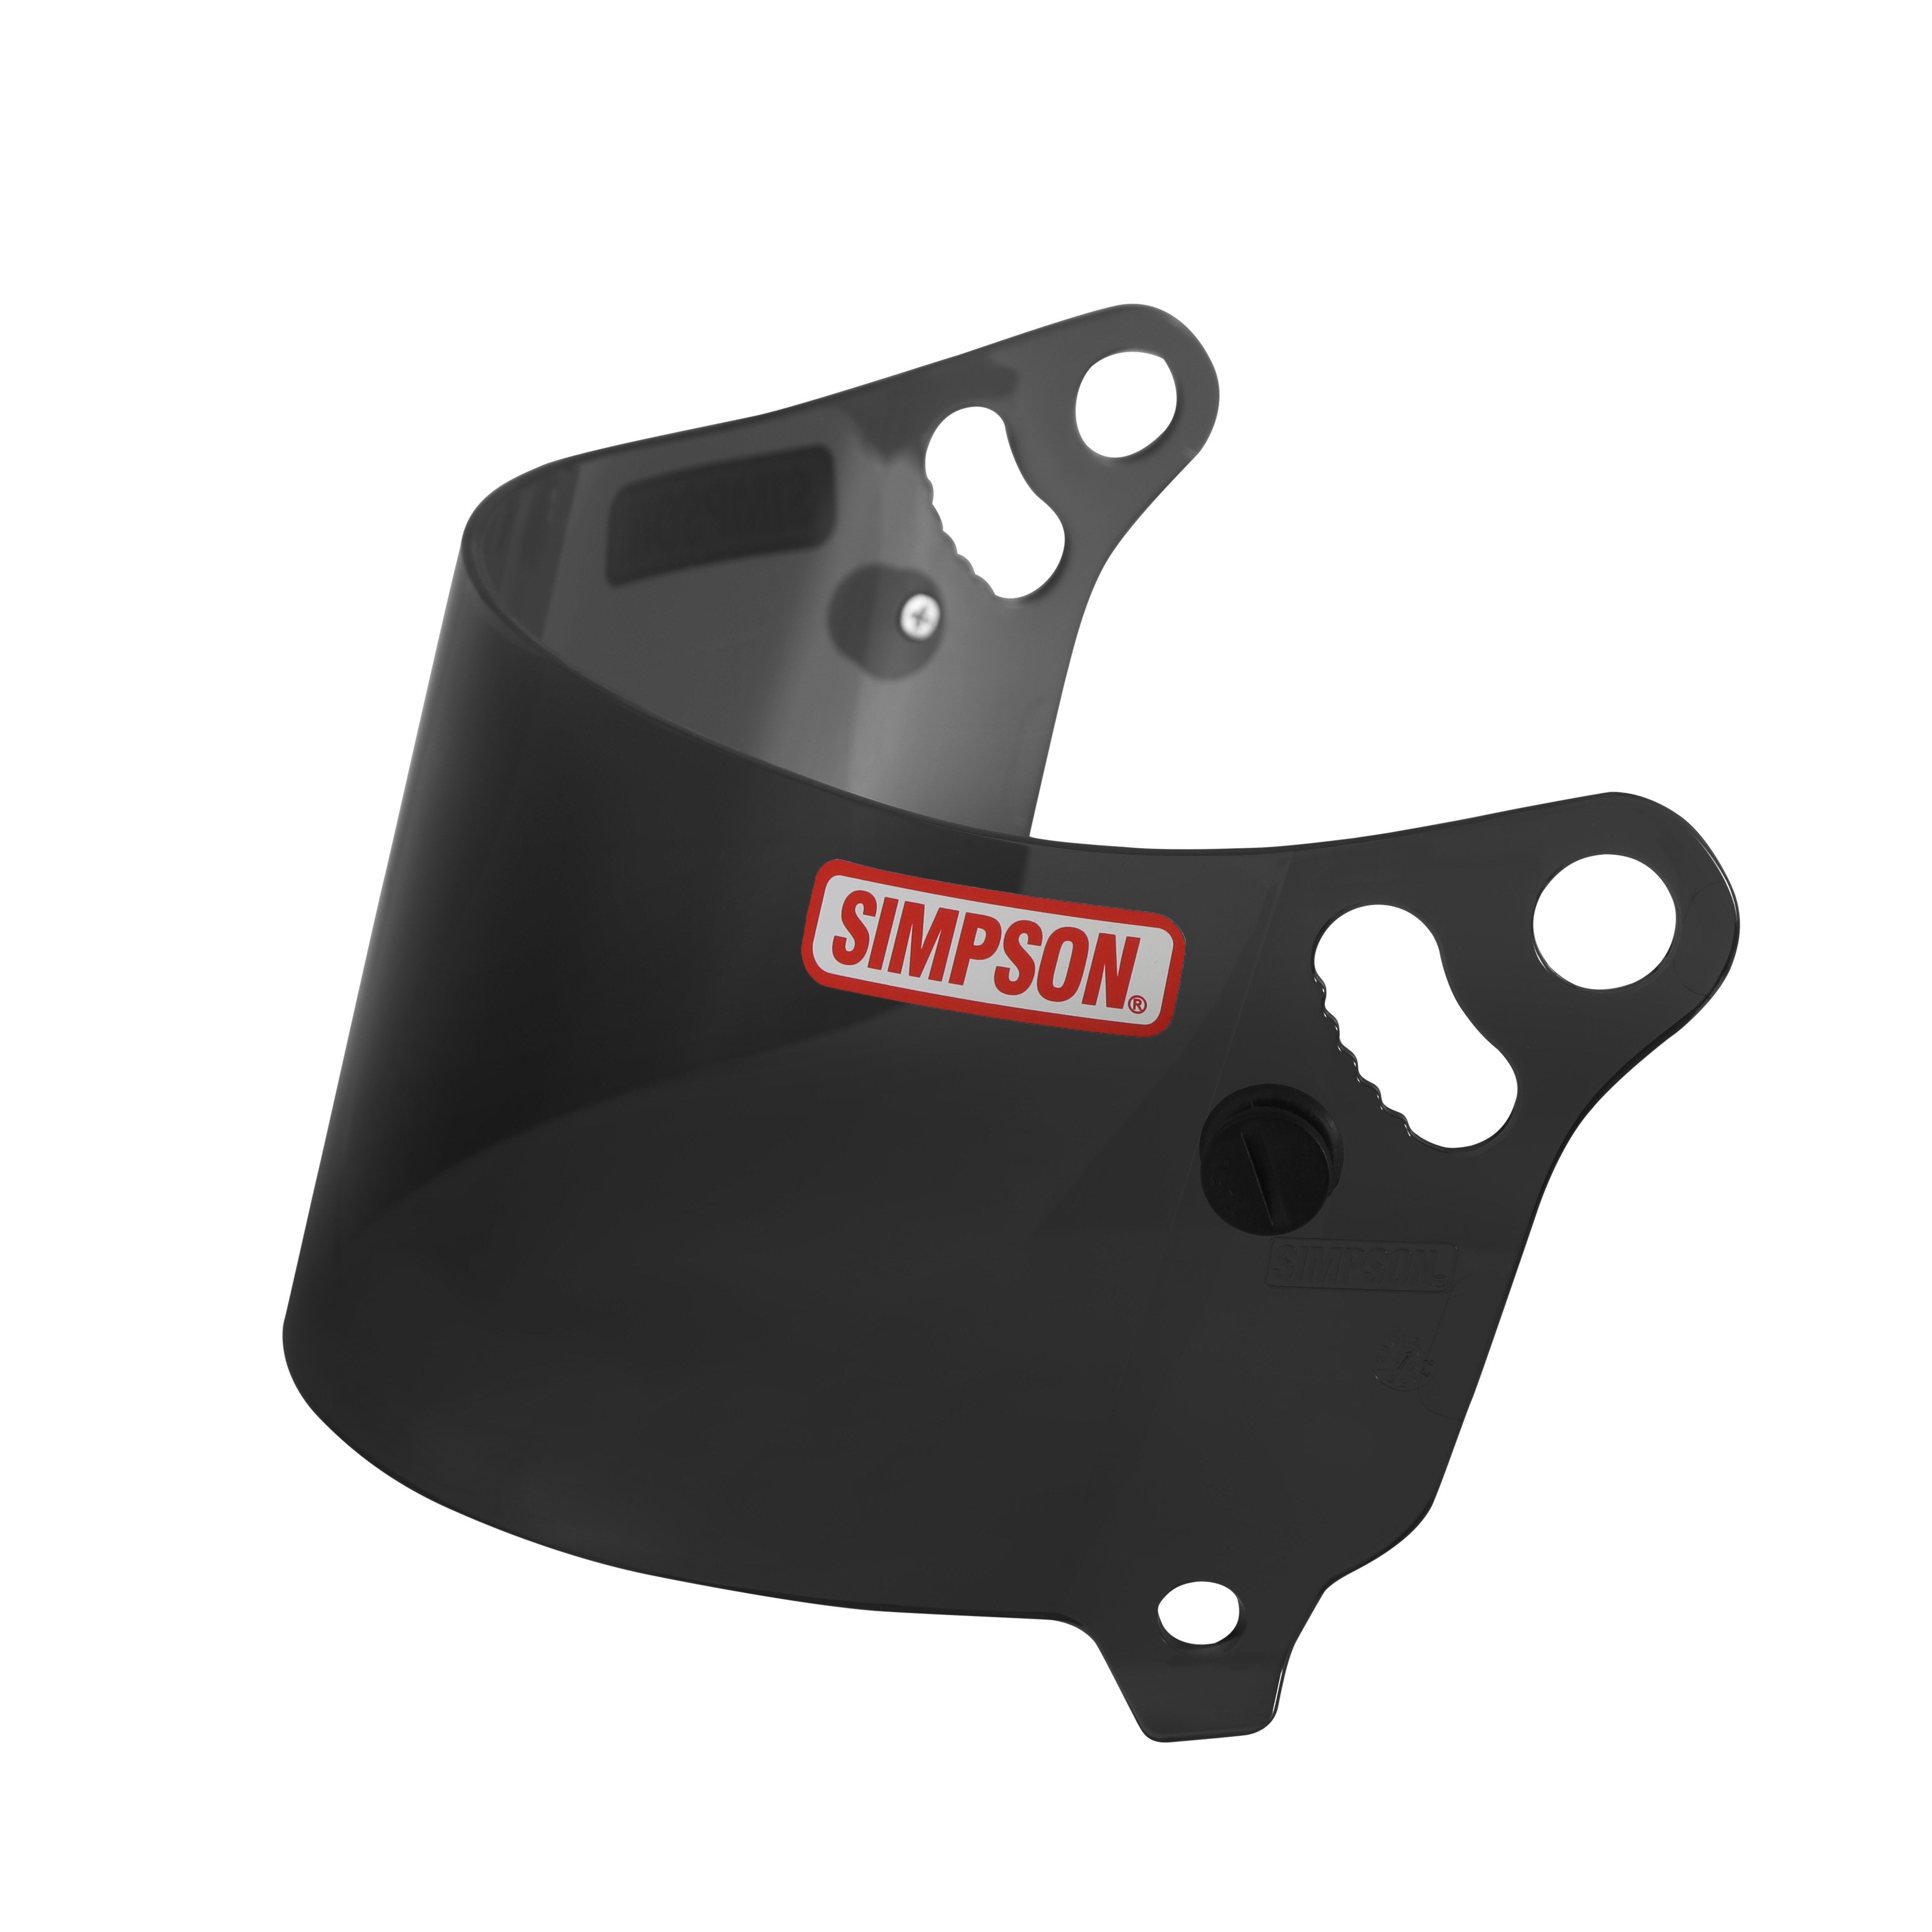 Simpson - Viper Racing Helmet Shield